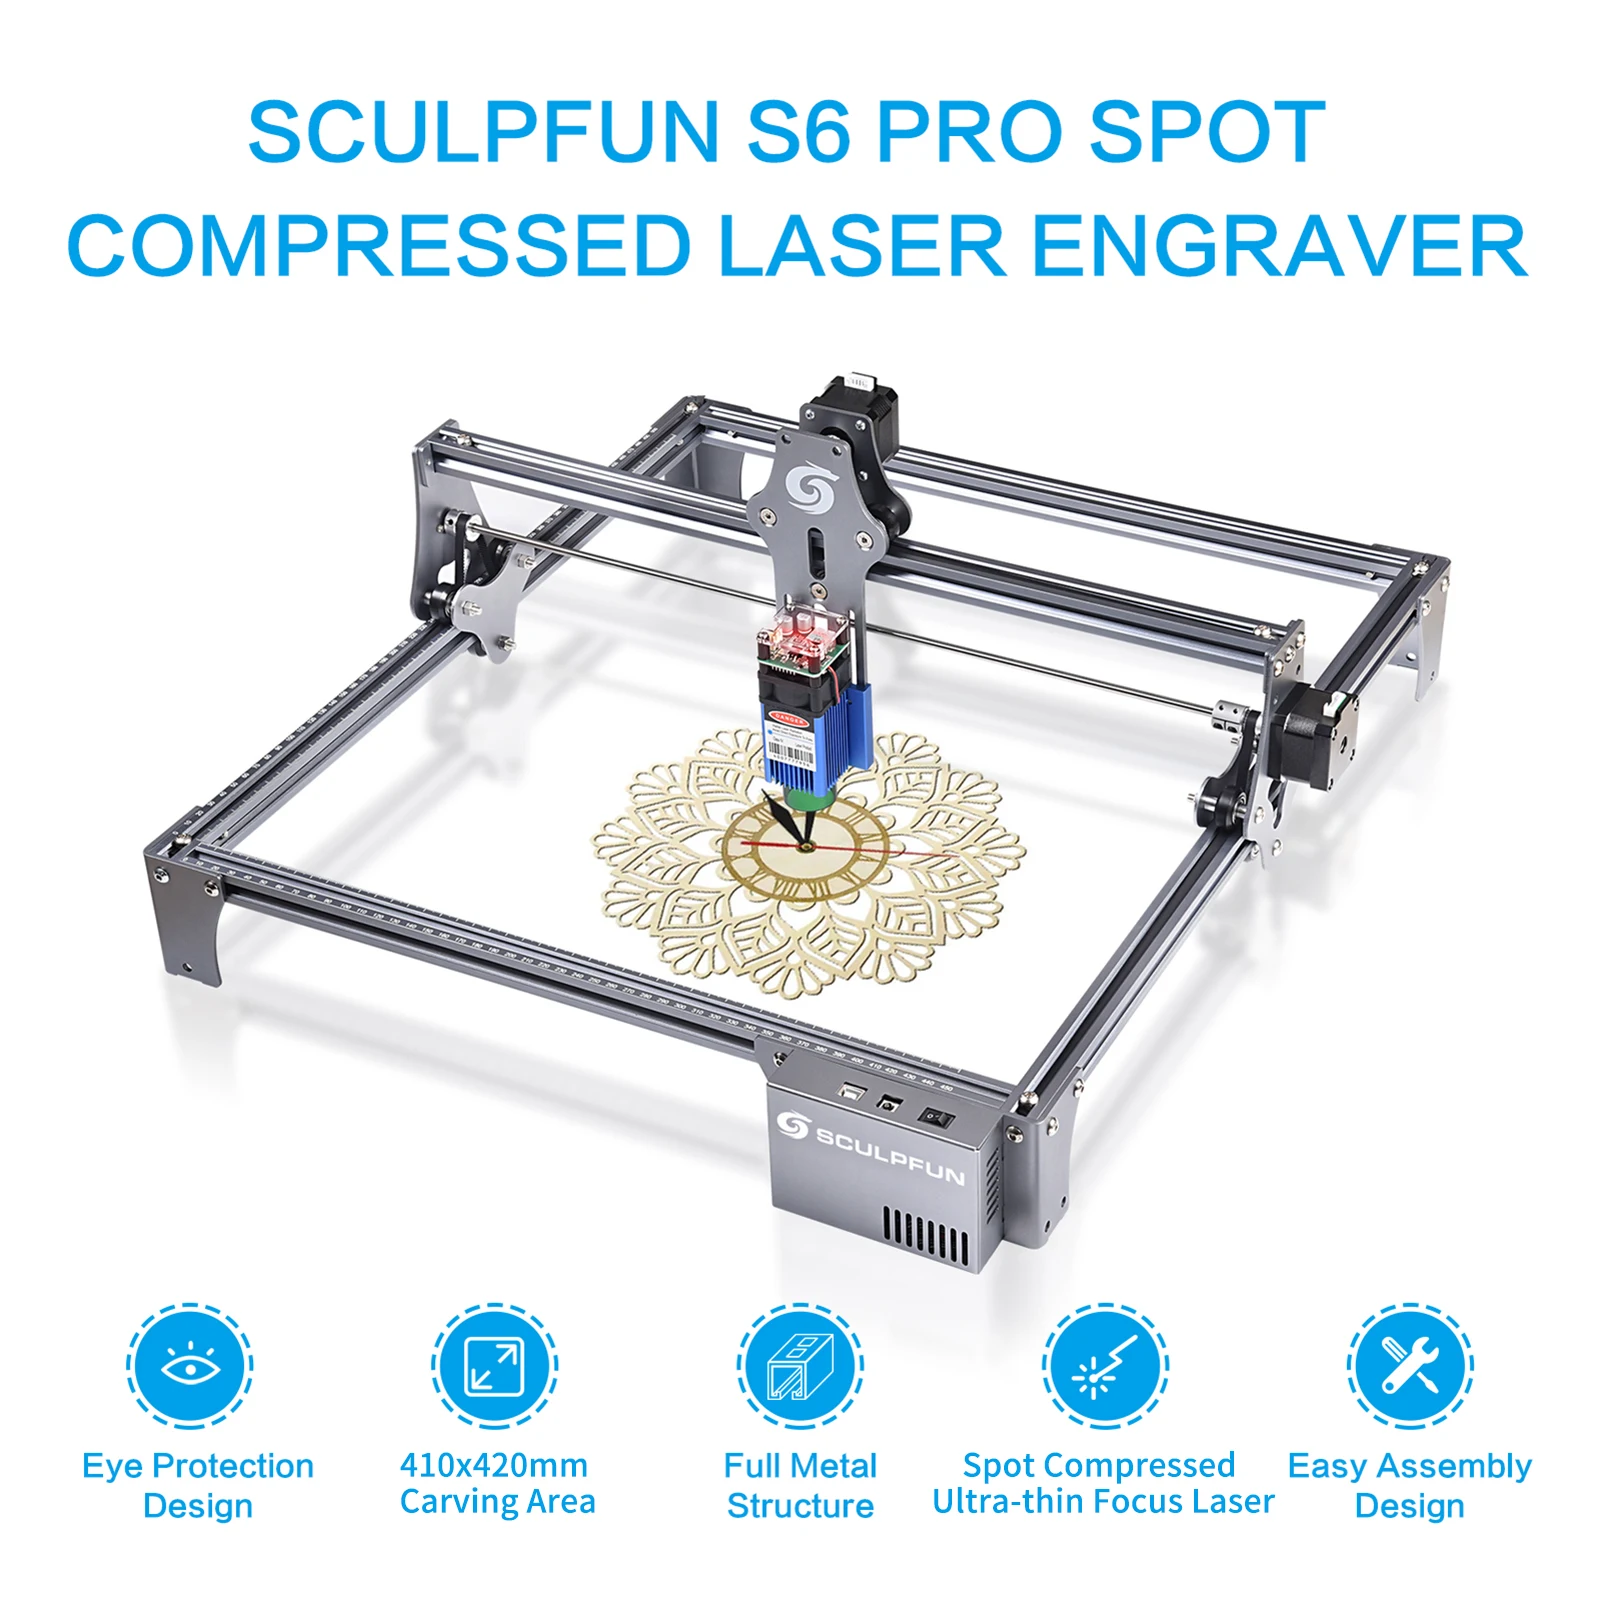 SCULPFUN S6 Pro Laser Engraver LD+FAC Spot Compression Ultra-thin Focus Desktop DIY Engraving Cutting Machine 410x420mm creality 3d printer